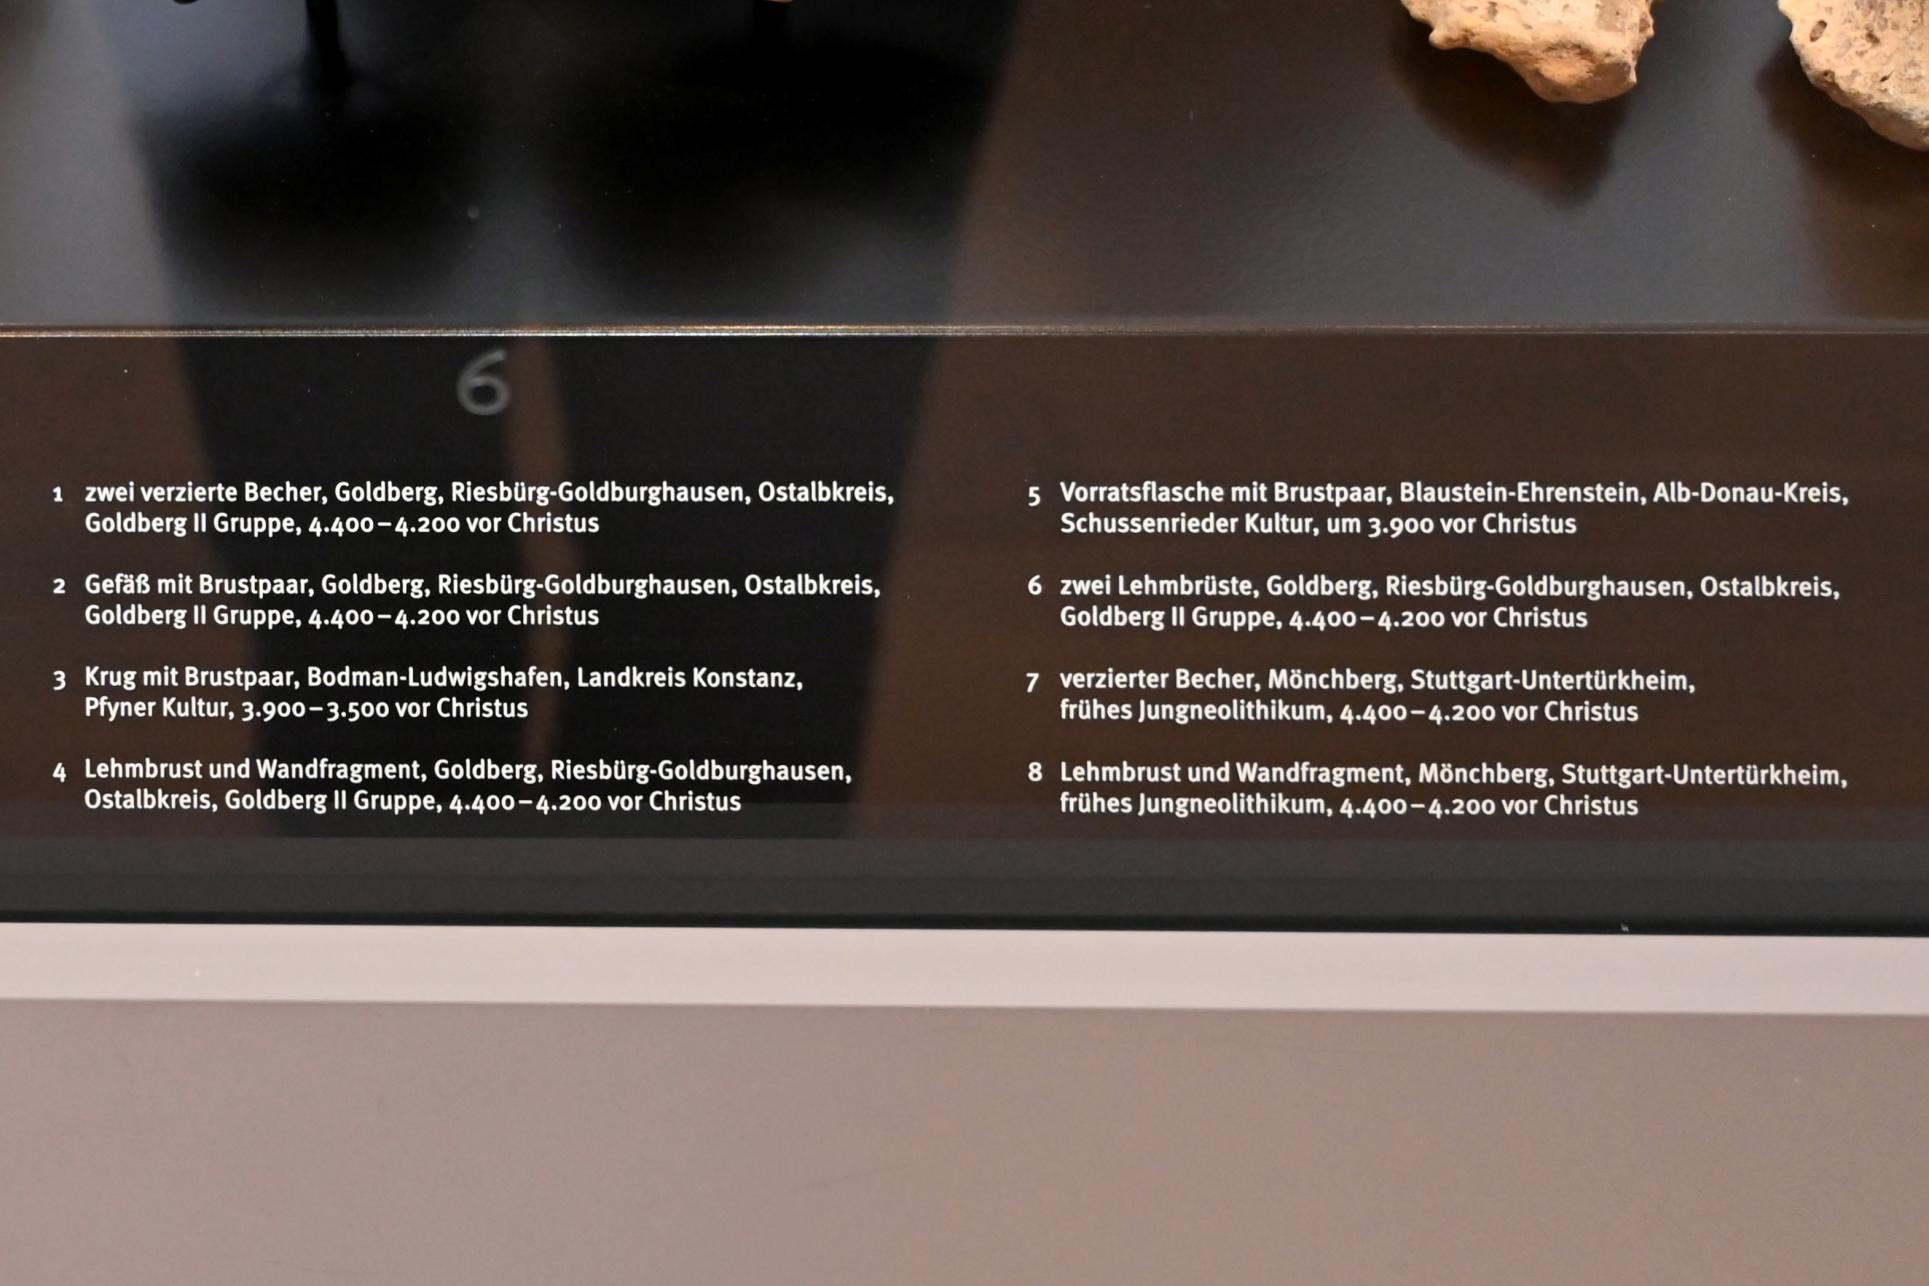 Lehmbrust und Wandfragment, Jungneolithikum, 4400 - 3500 v. Chr., 4400 - 4200 v. Chr., Bild 3/4